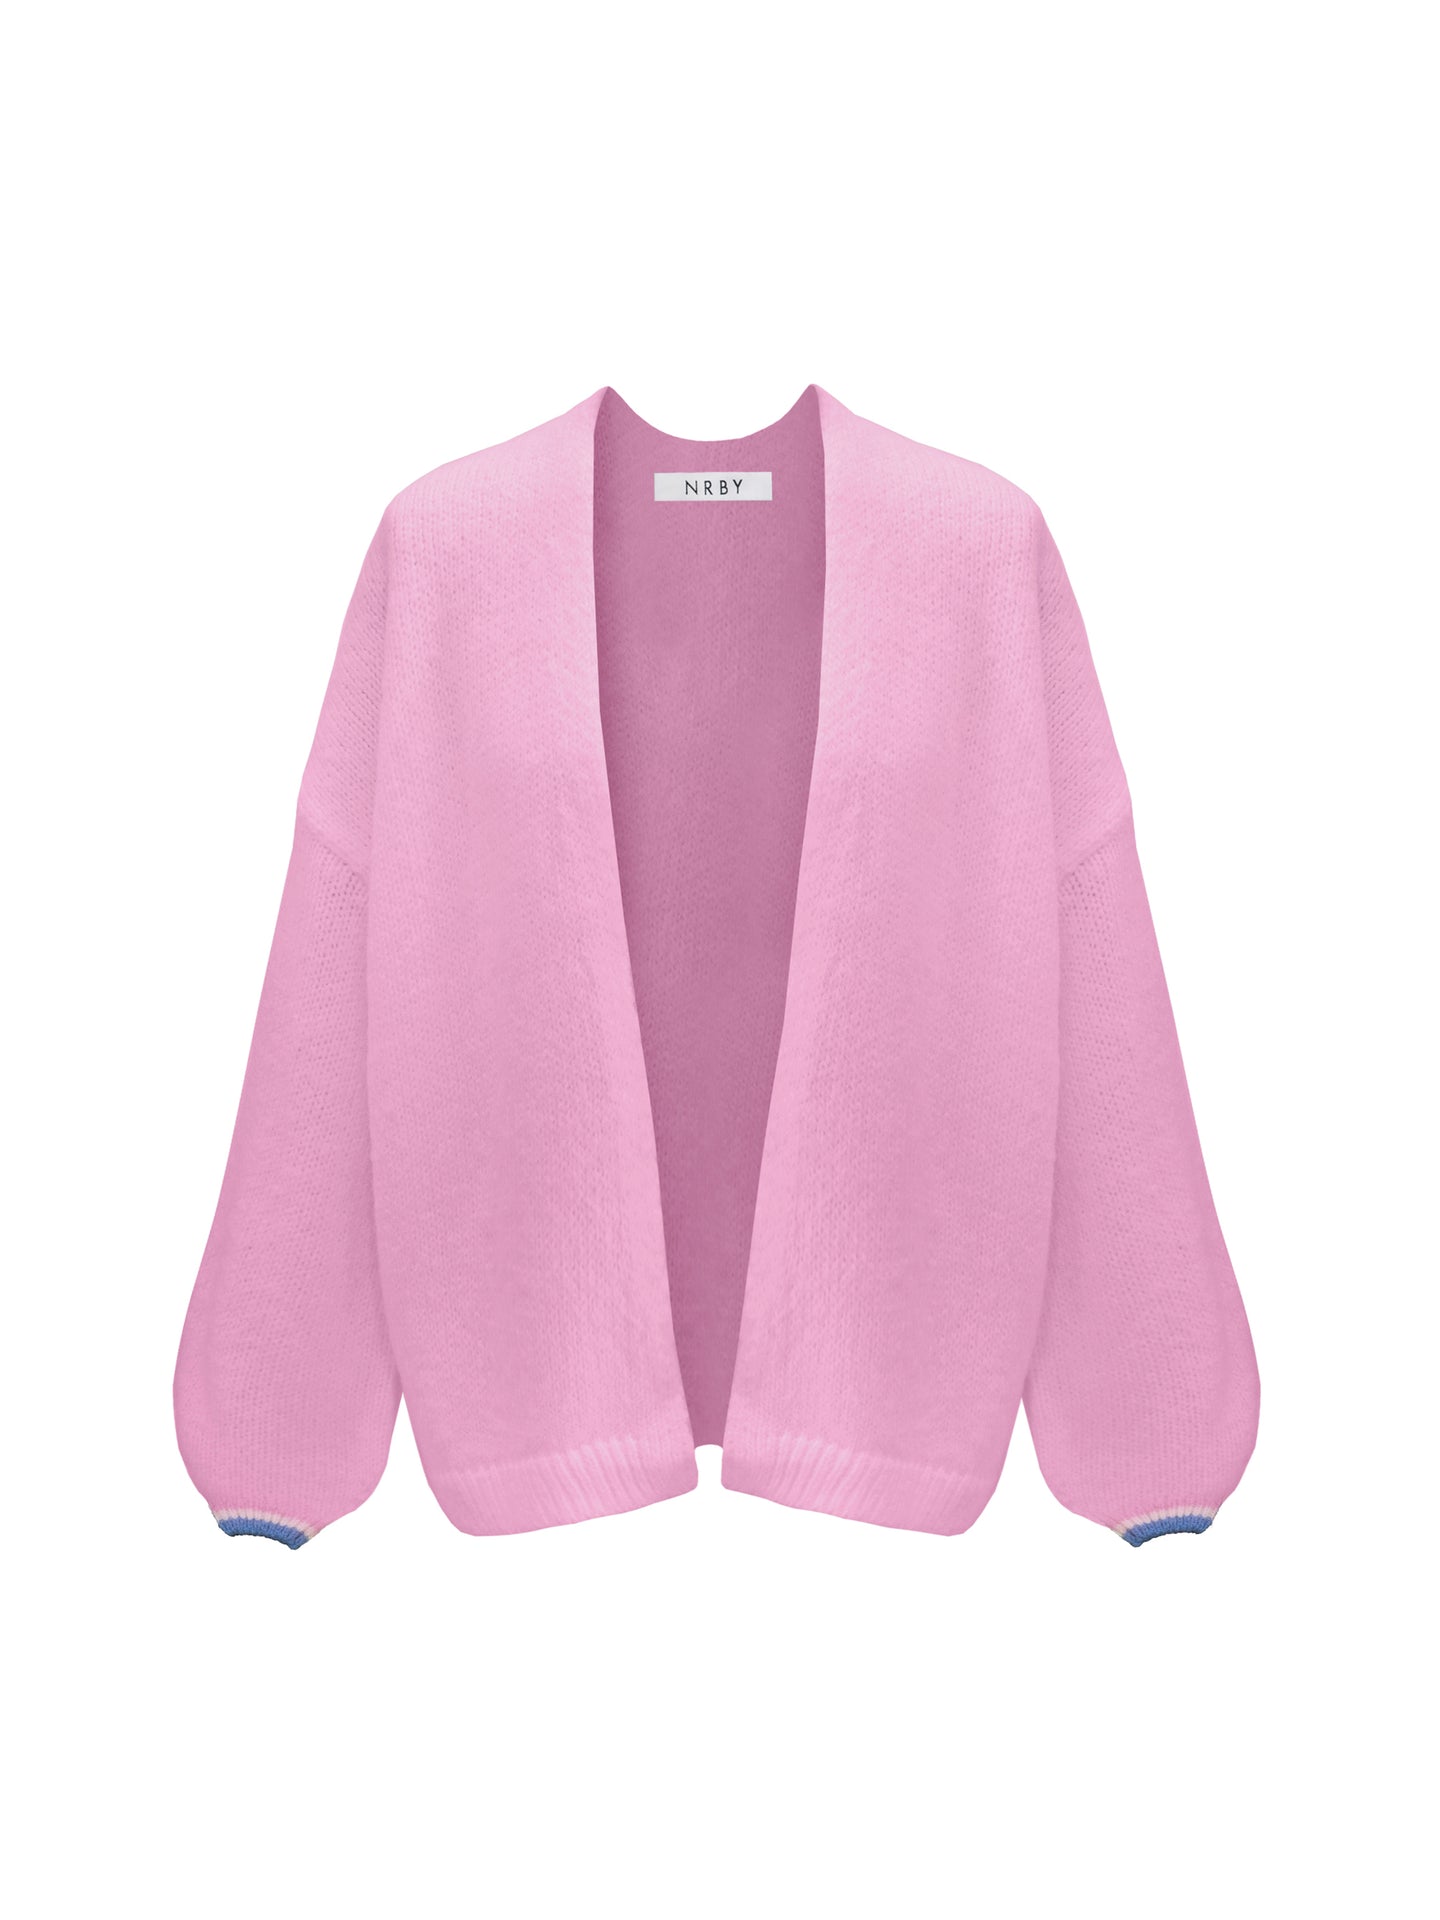 Misha alpaca blend tipped cardigan - Pink Sorbet / Provence Blue